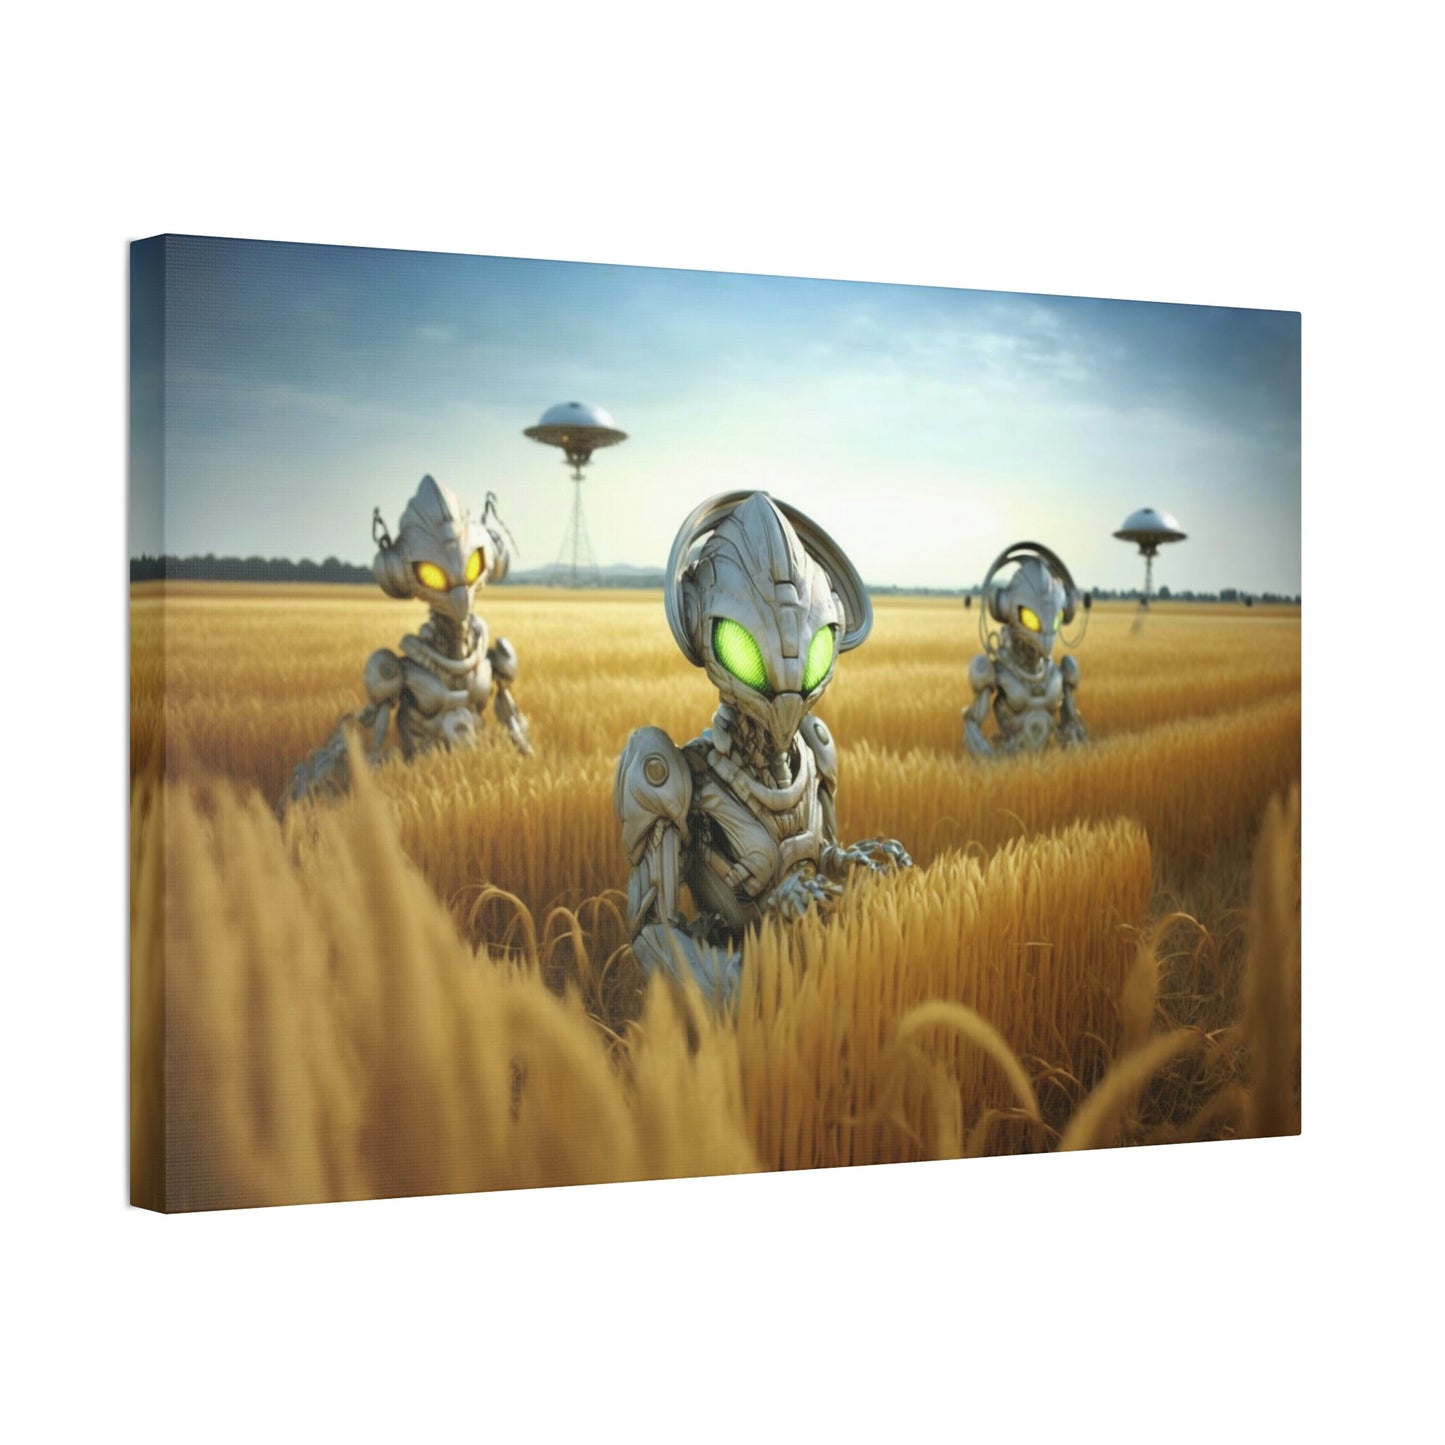 Intergalactic Beauty: Alien-Inspired Art Print on Canvas & Poster